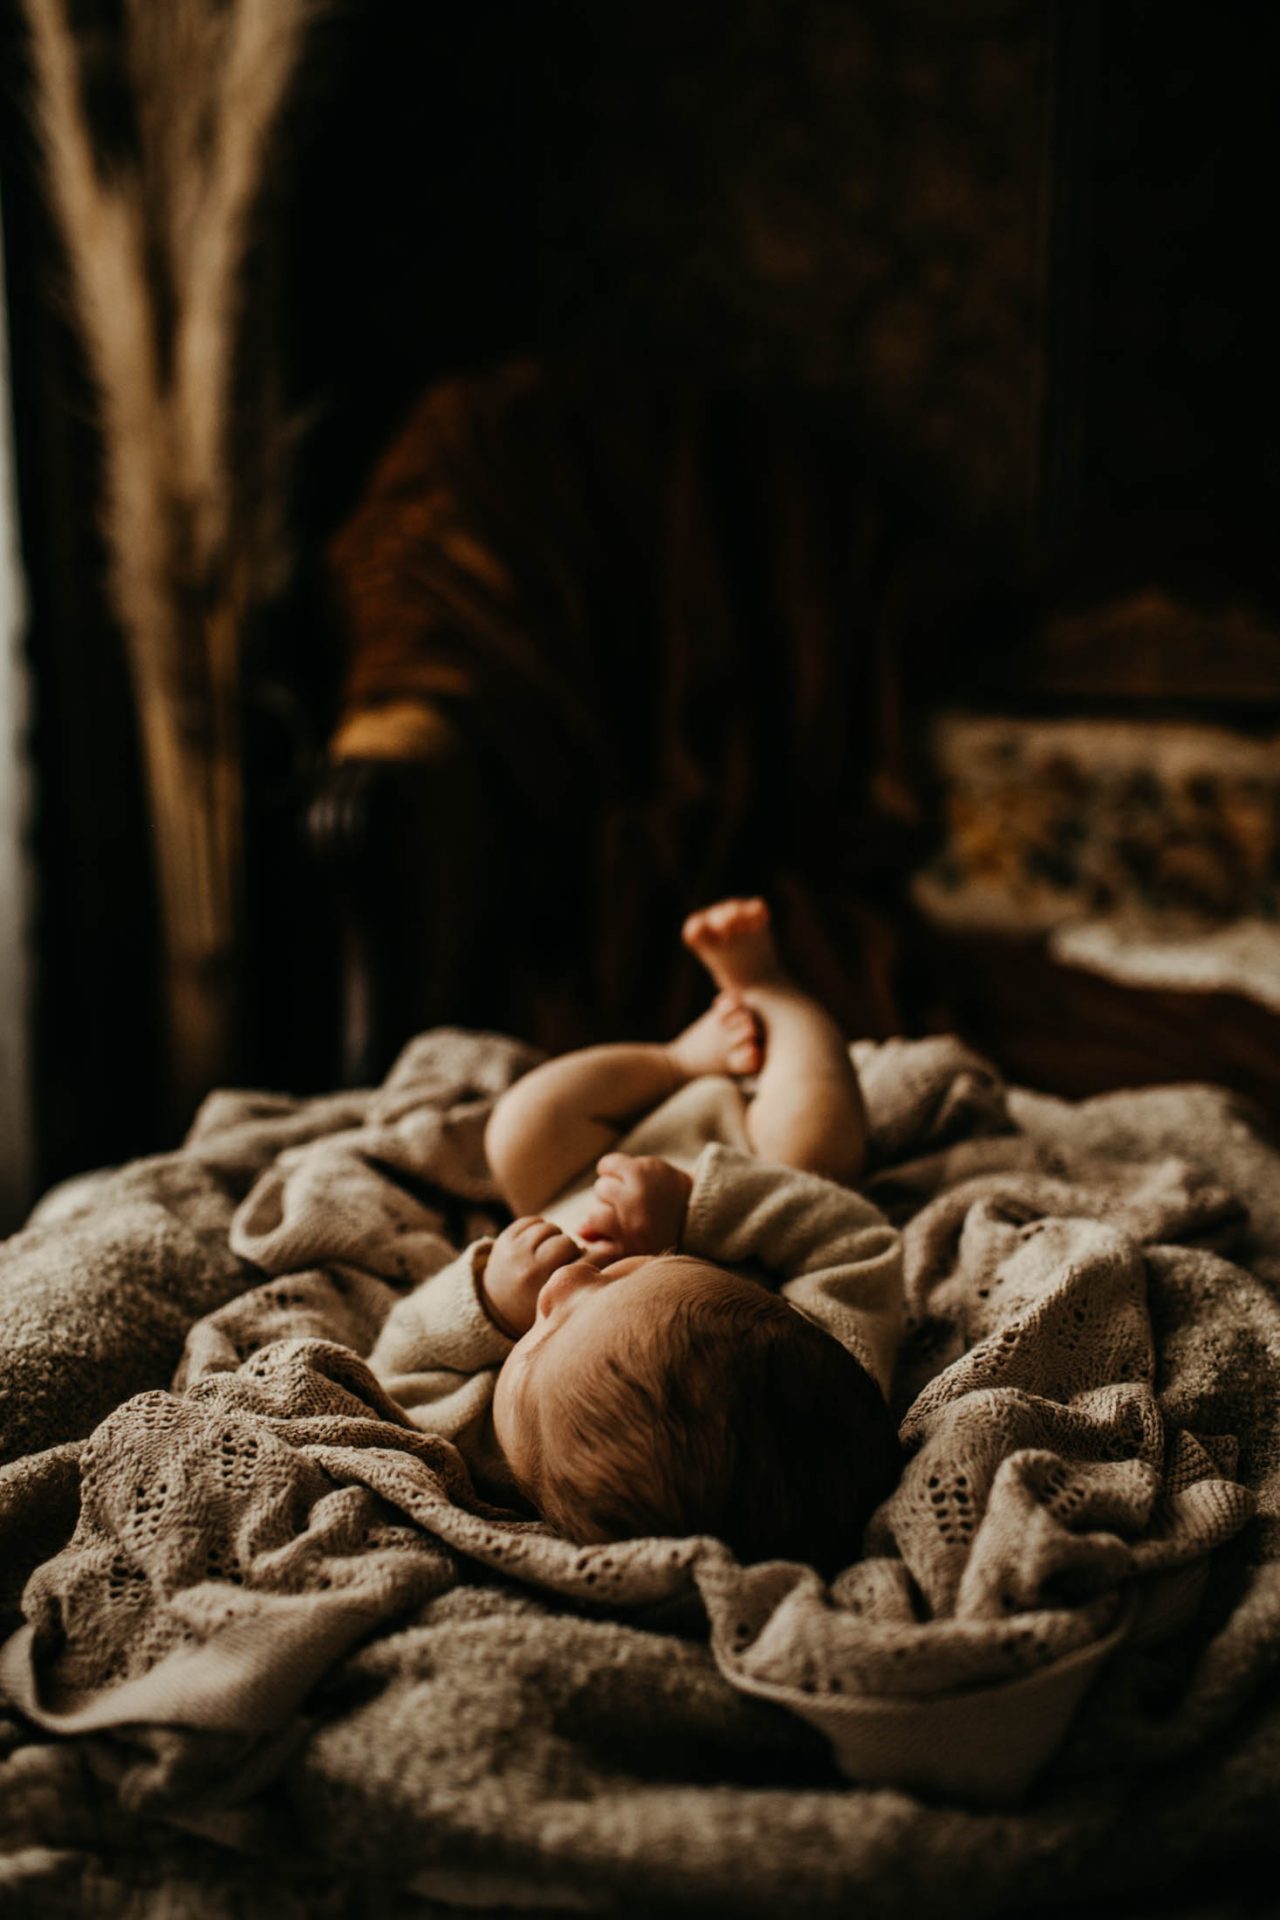 Surrey newborn photoshoots